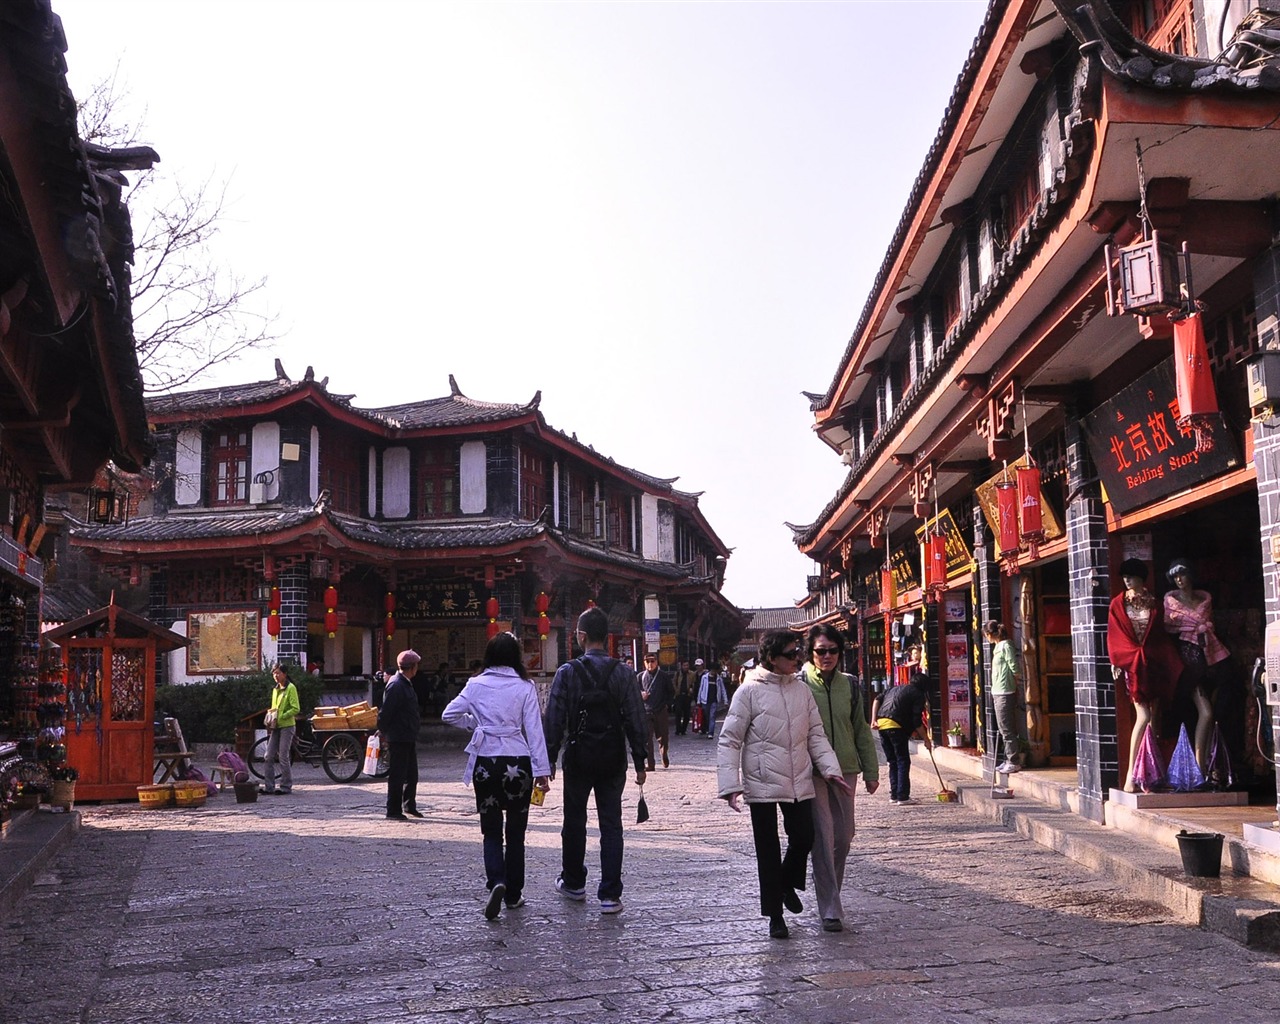 Lijiang ancient town atmosphere (2) (old Hong OK works) #10 - 1280x1024